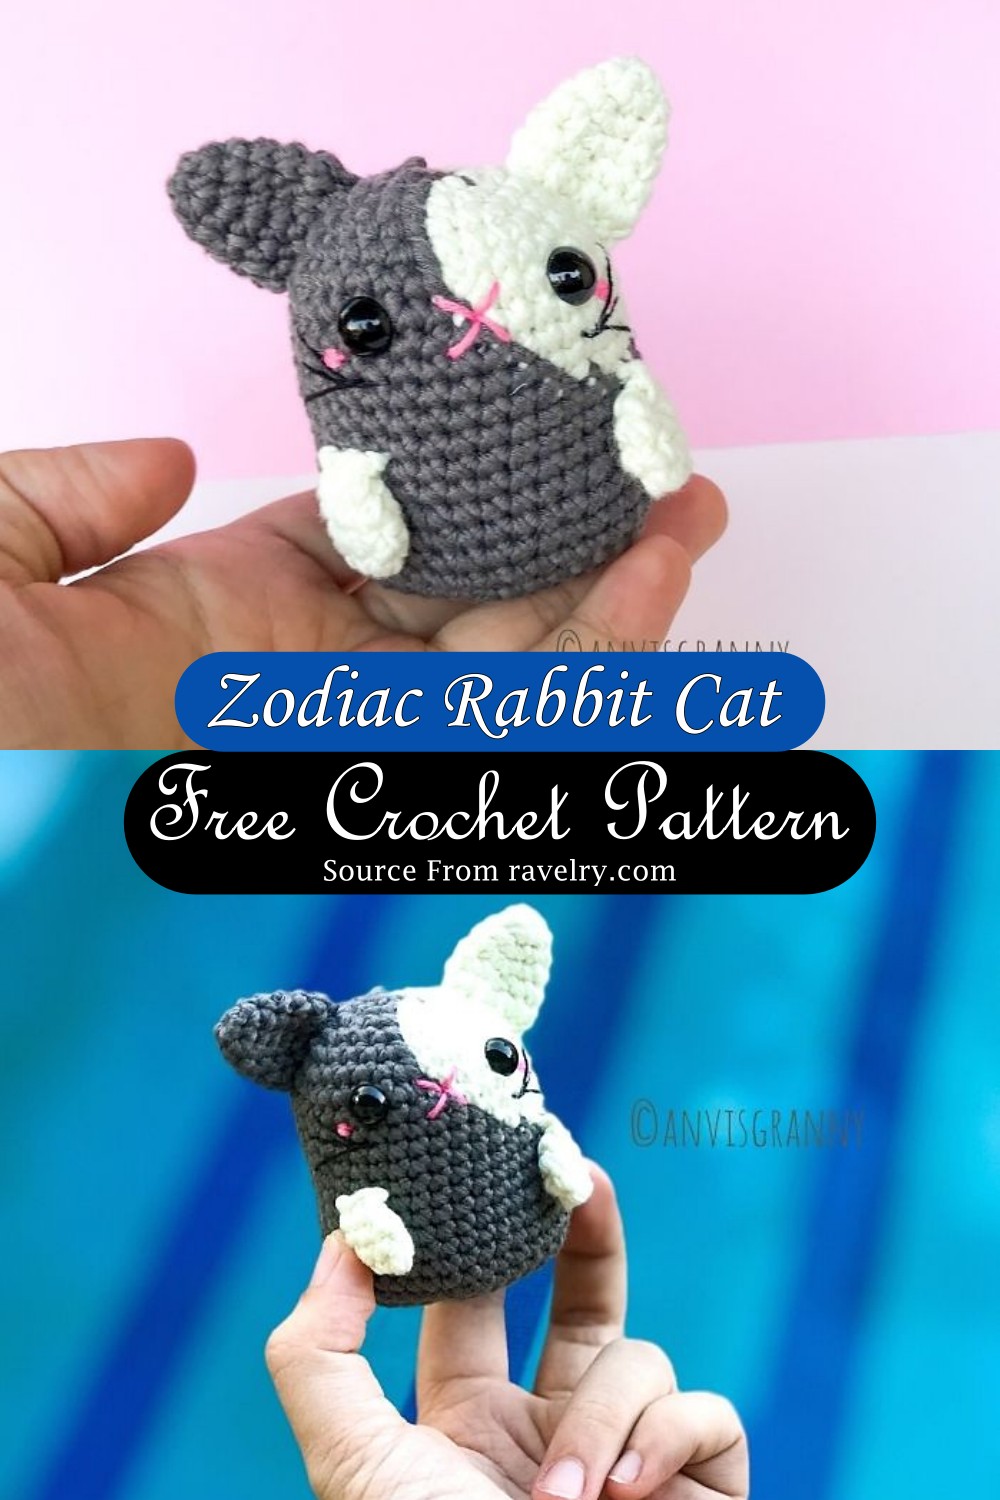 Zodiac Rabbit Cat